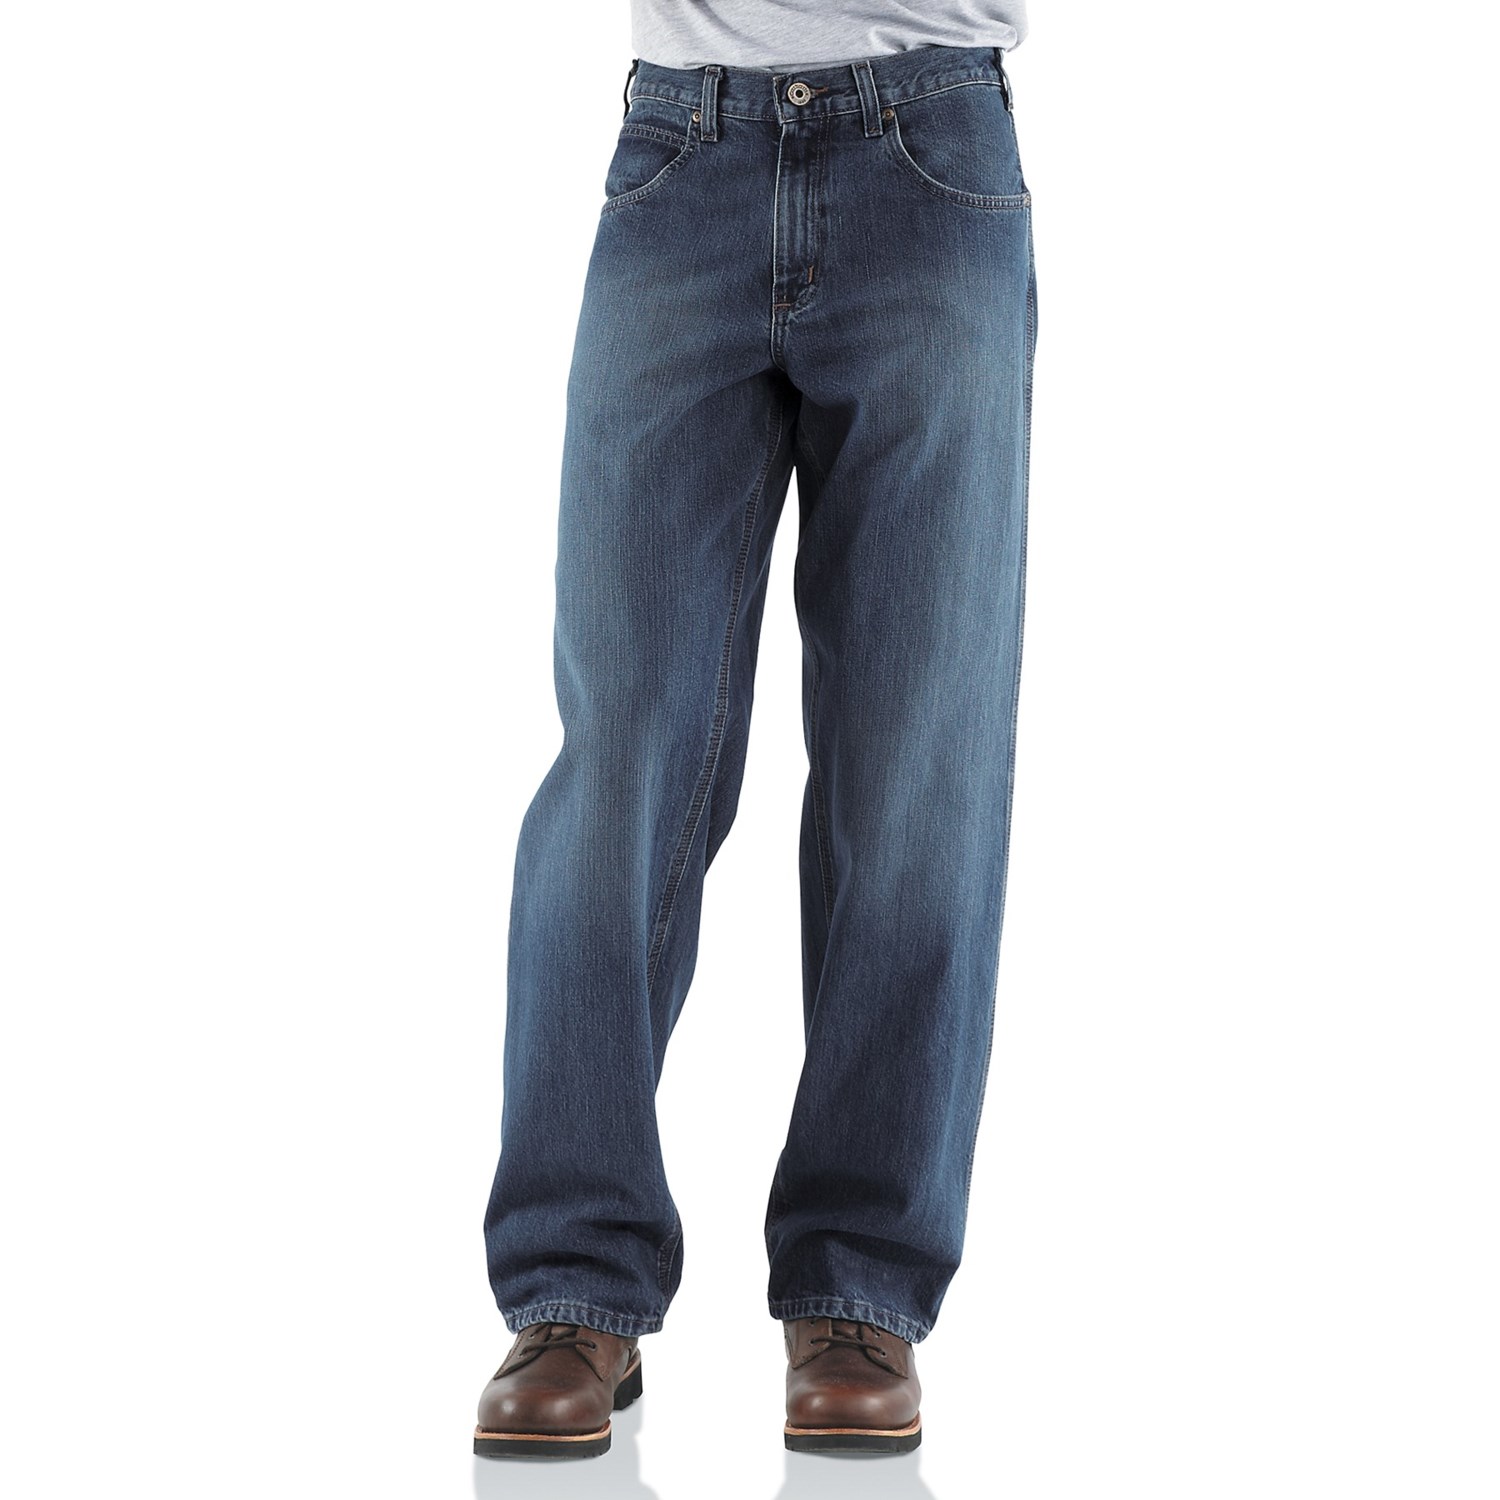 Carhartt Series 1889 Jeans (For Men) 87706